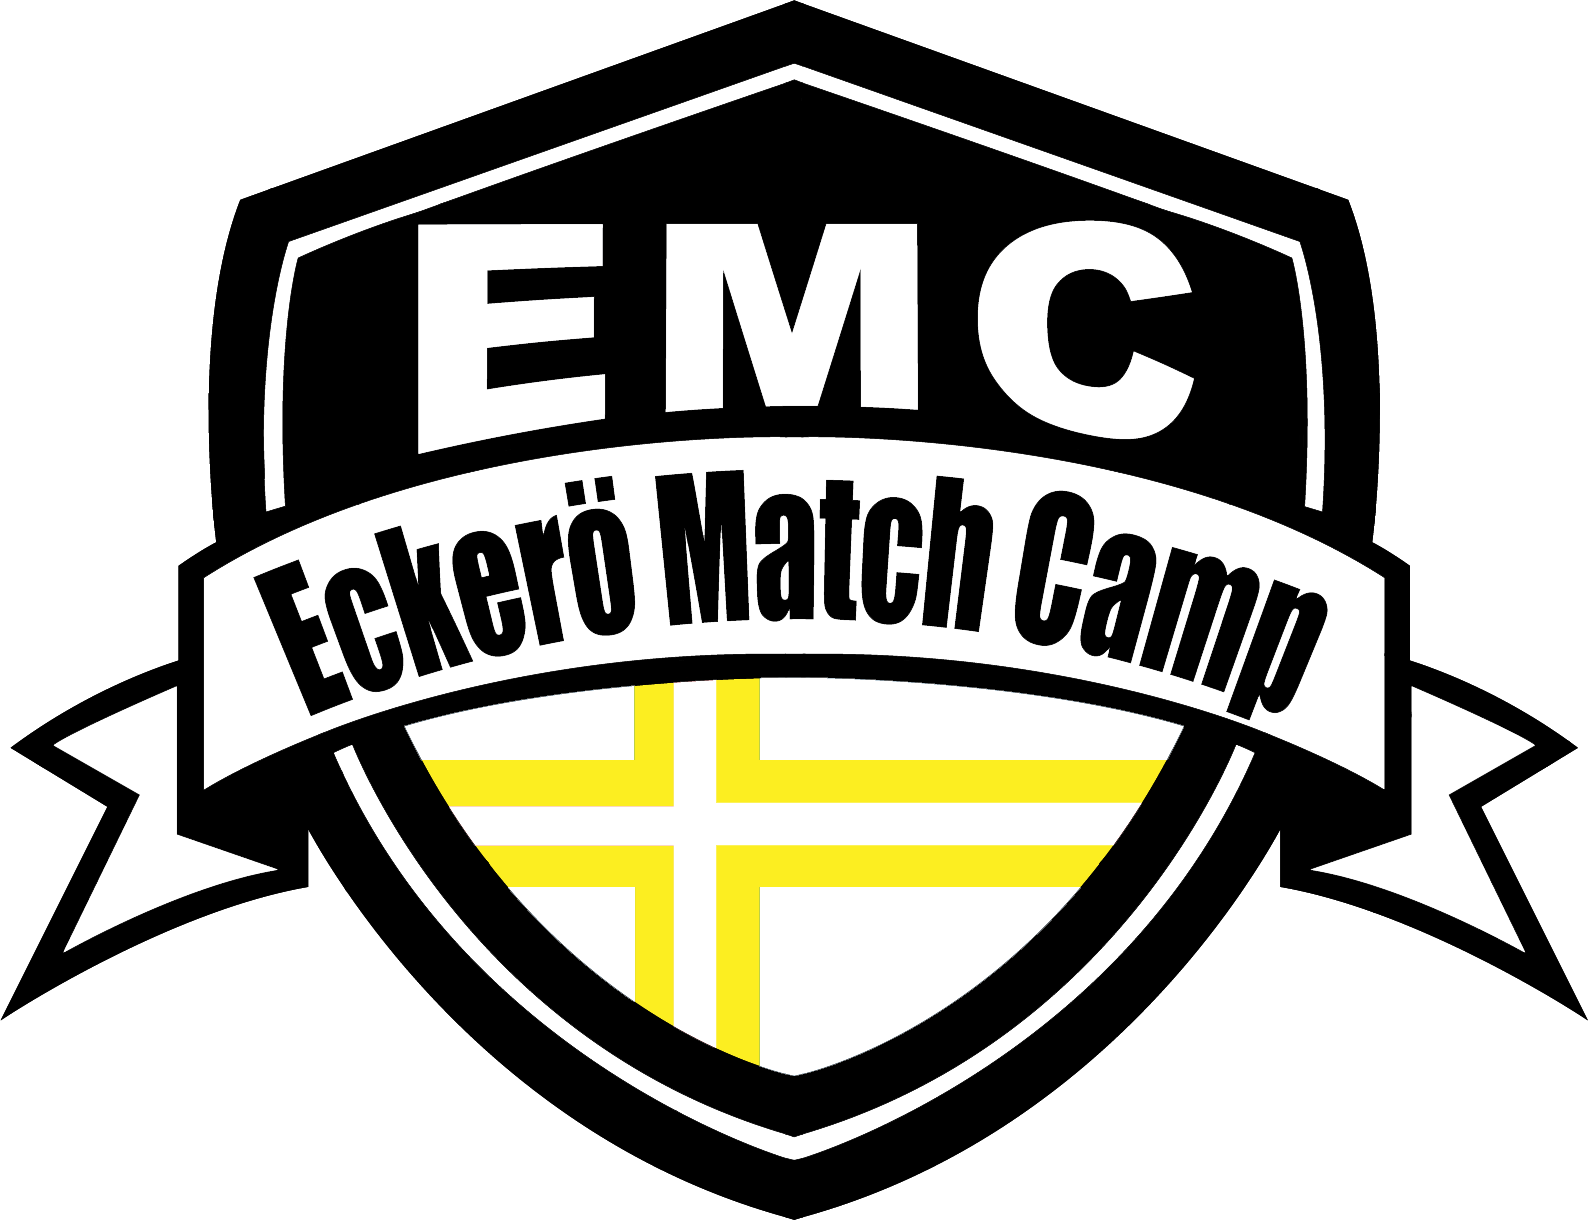 Eckerö Match Camp logo